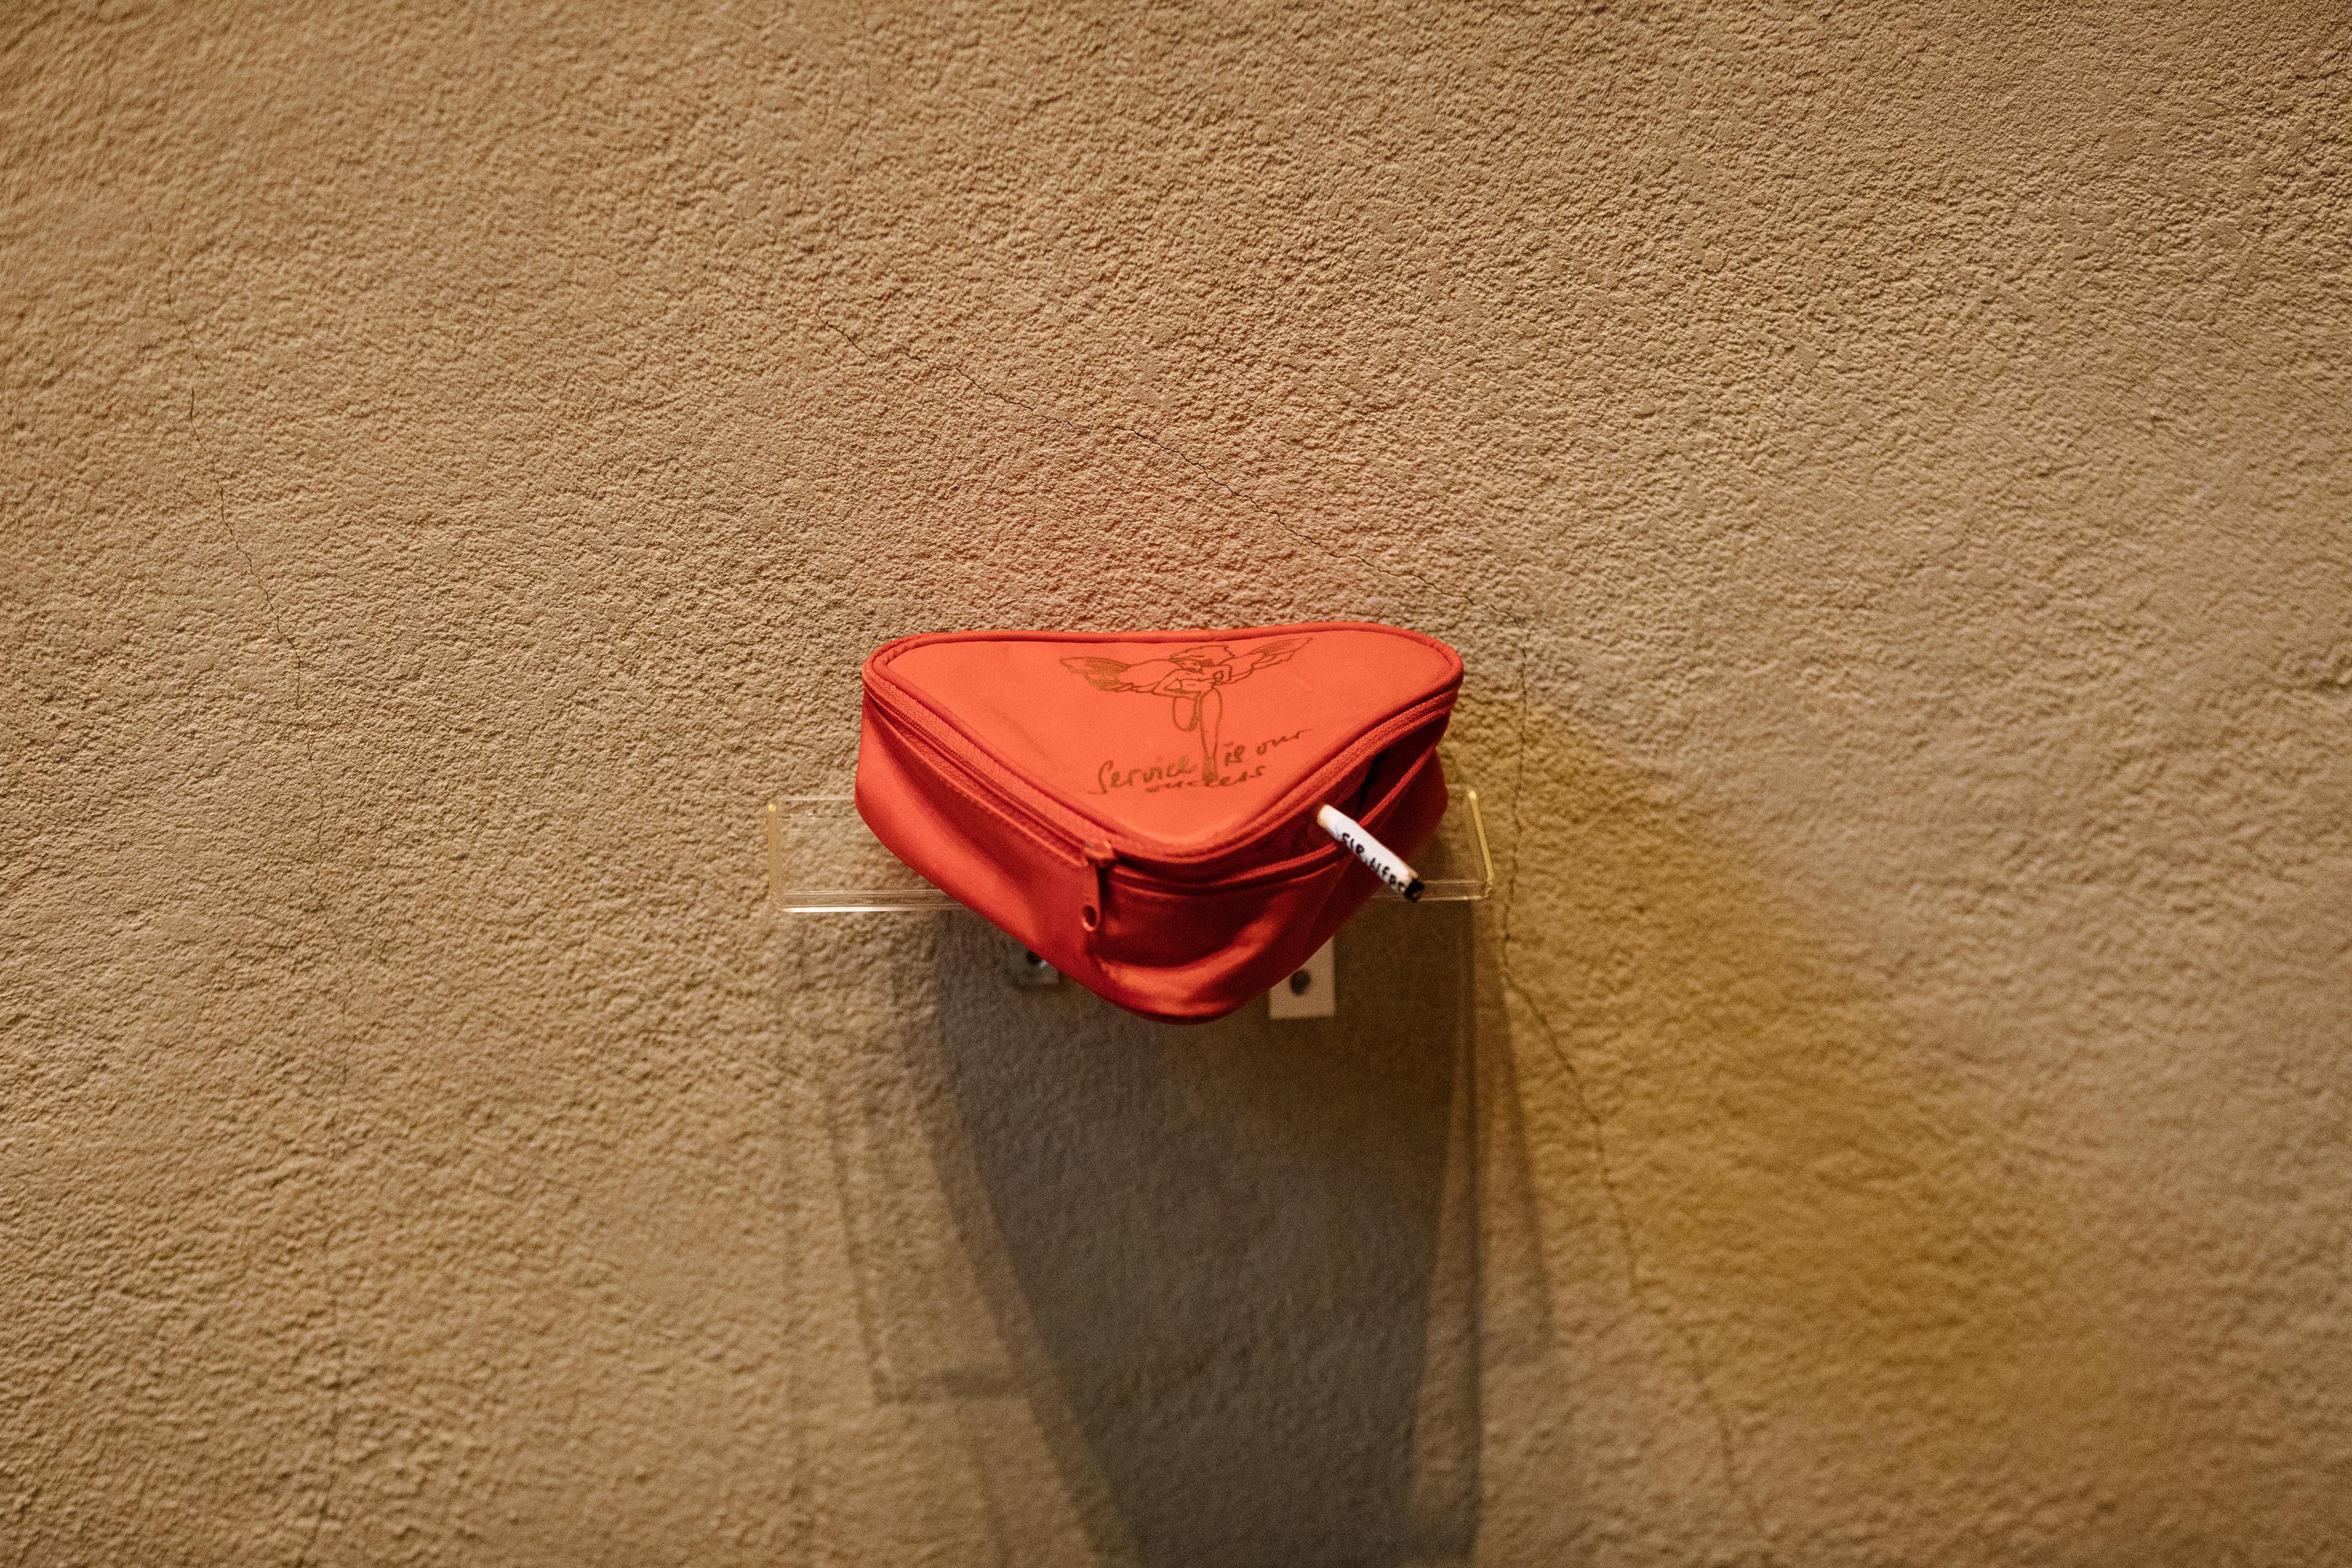 Voyeur, Voyeur - 2022  - material: Lauda Air bag ("Service is our success"), handrolled cigarette with handwritten text (Sir, Alfred), plastic lid, brackets, 17 × 6 × 15 cm